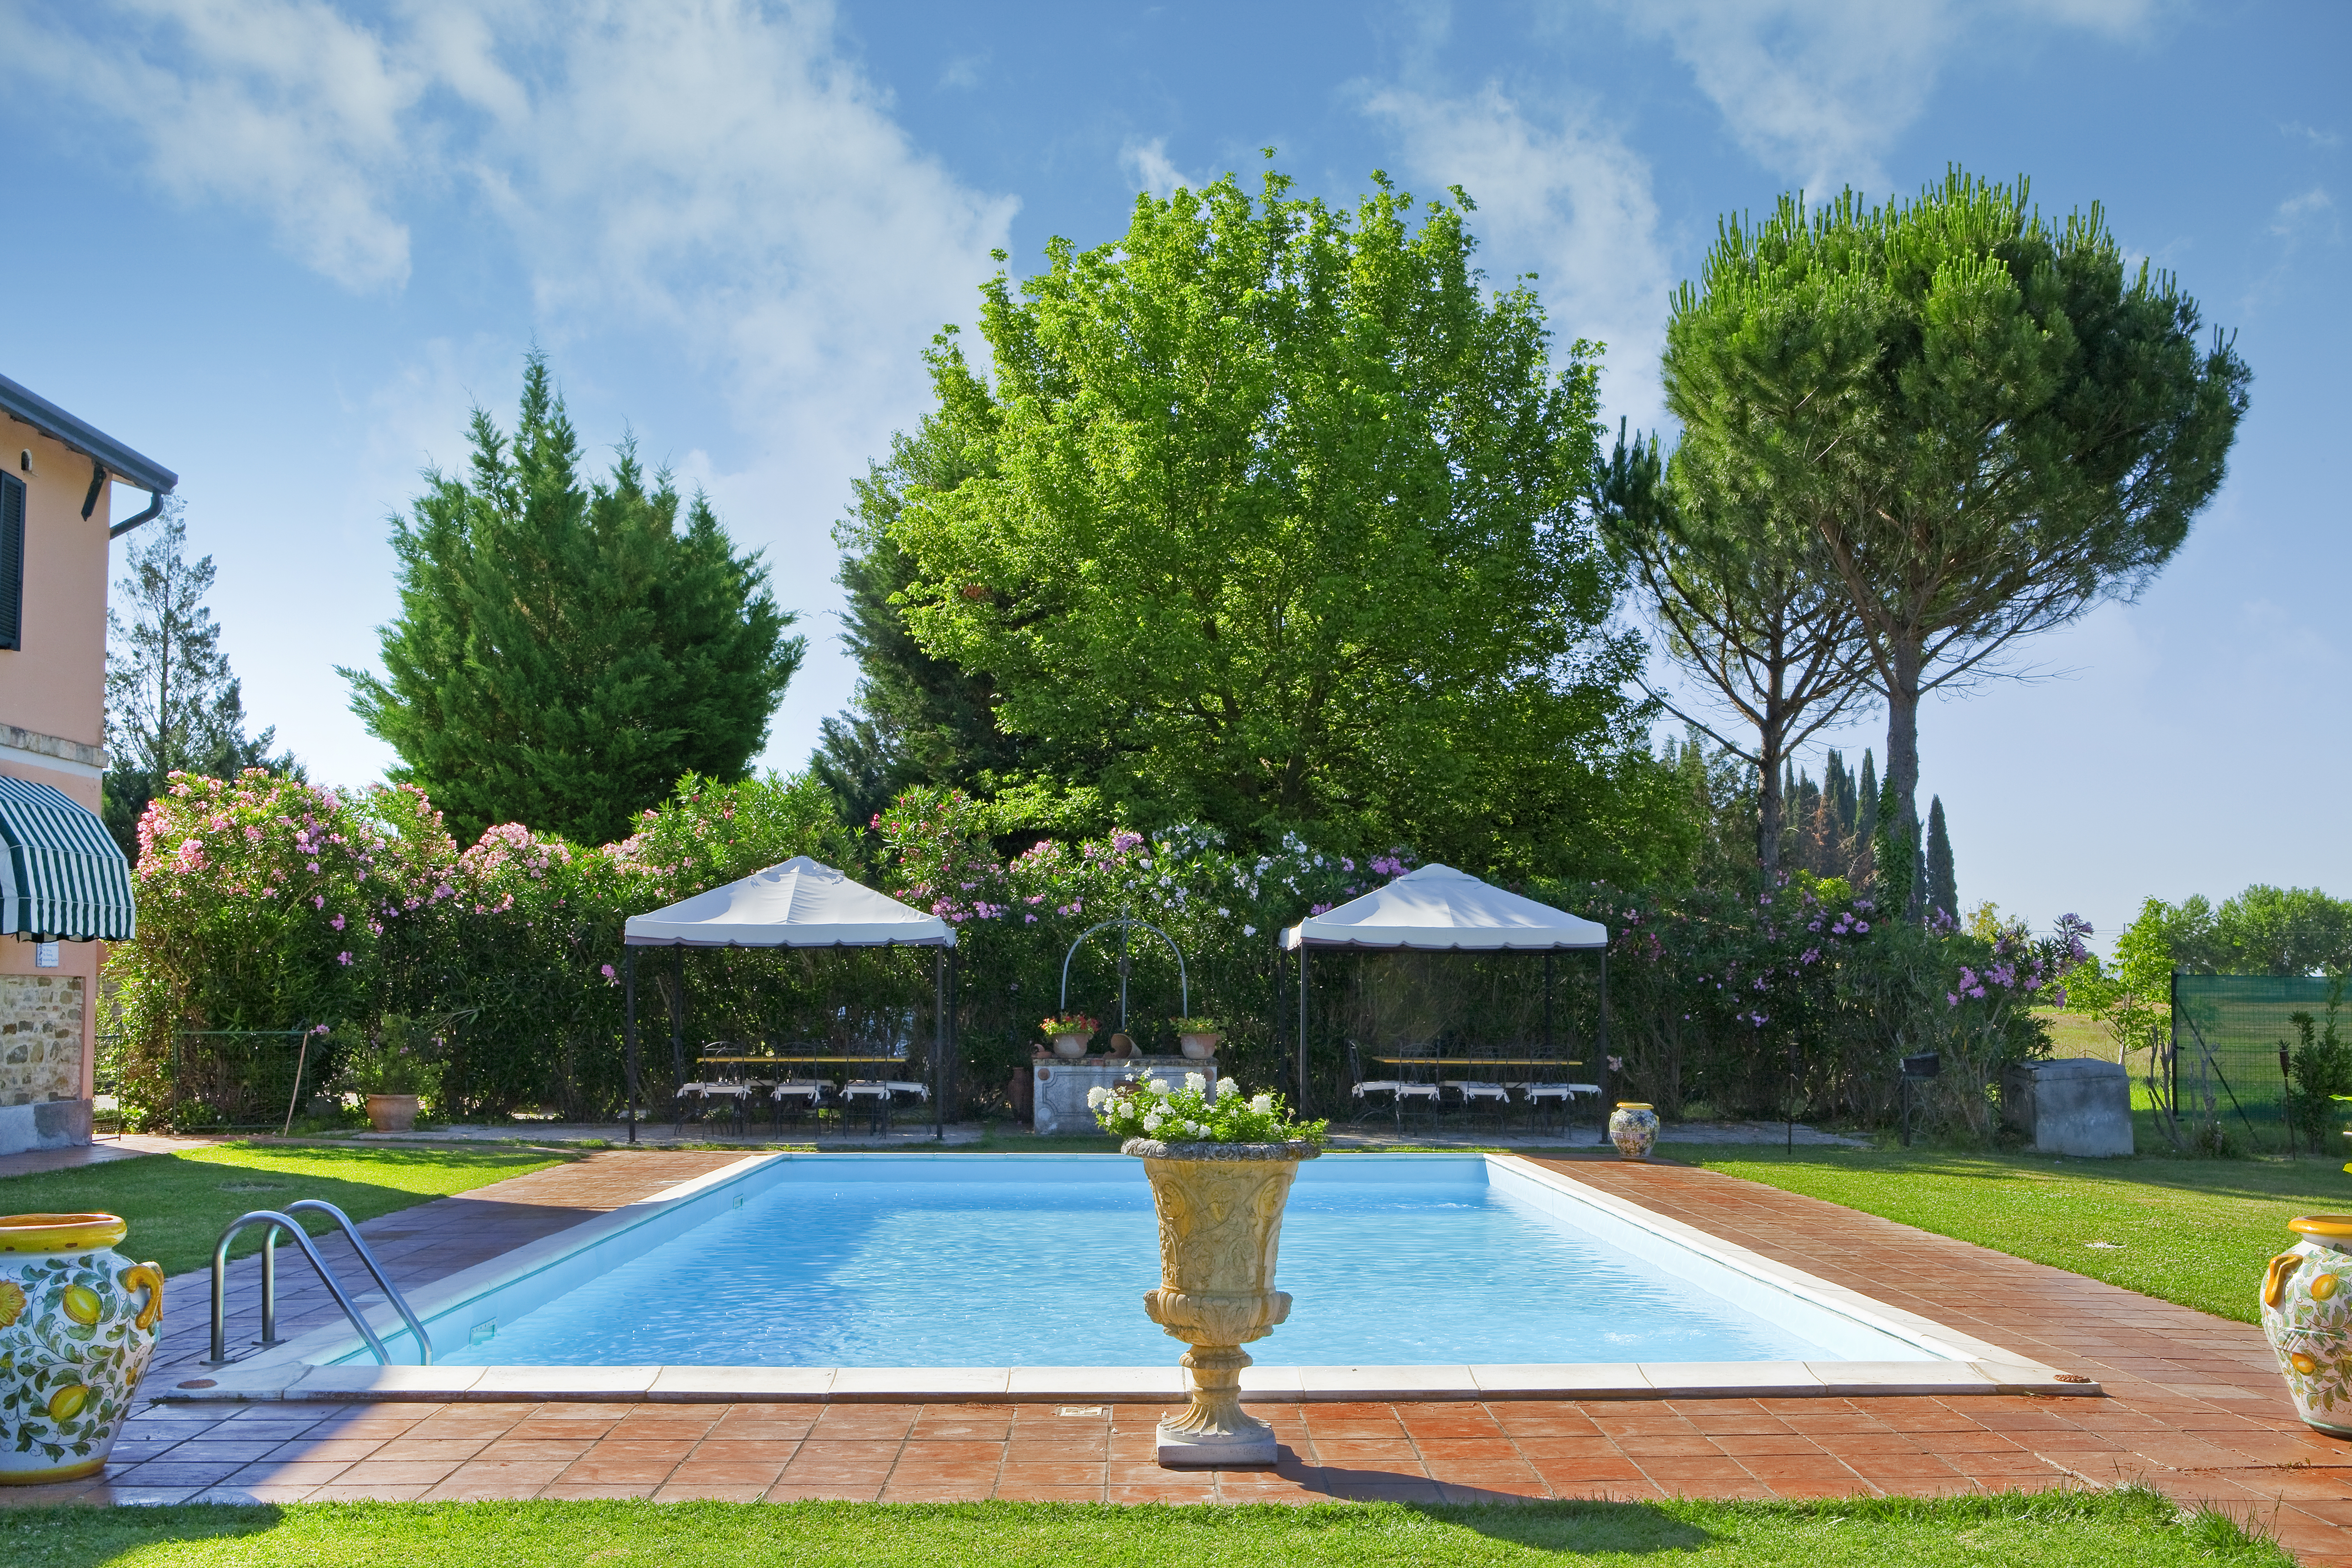 The pool at La Fattoria del Gelso in Cannara 